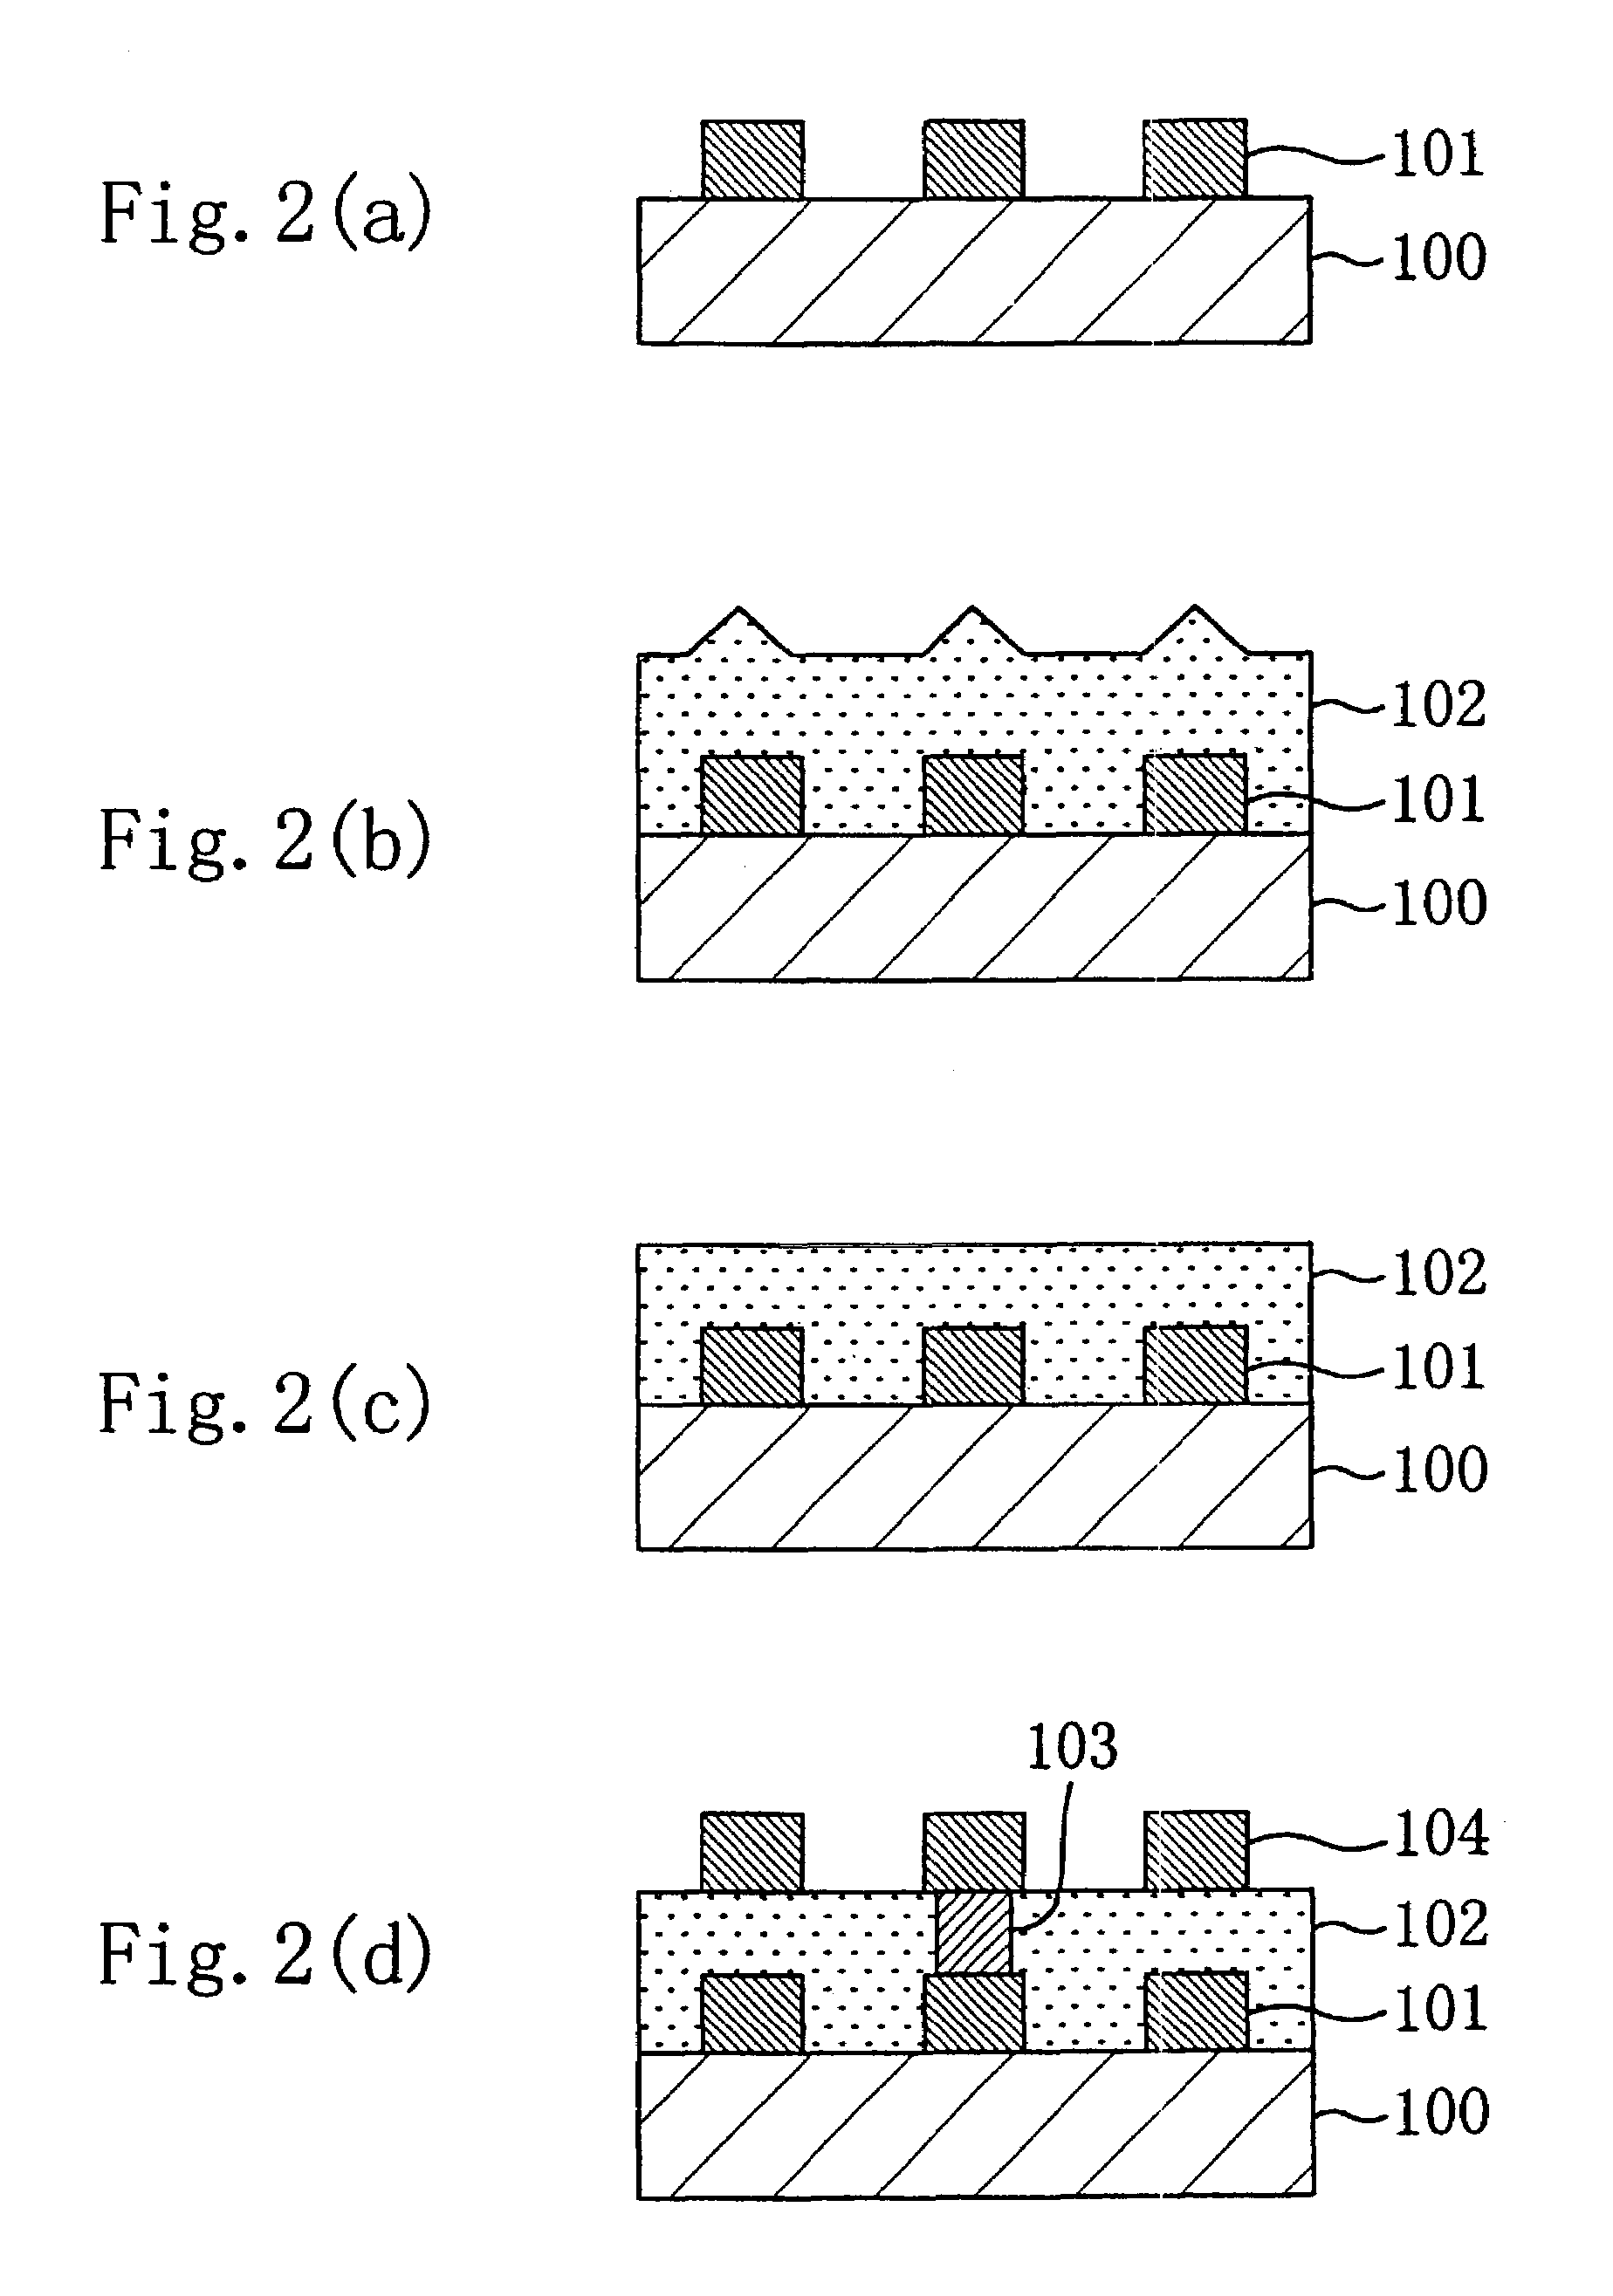 Method of forming interlayer insulating film